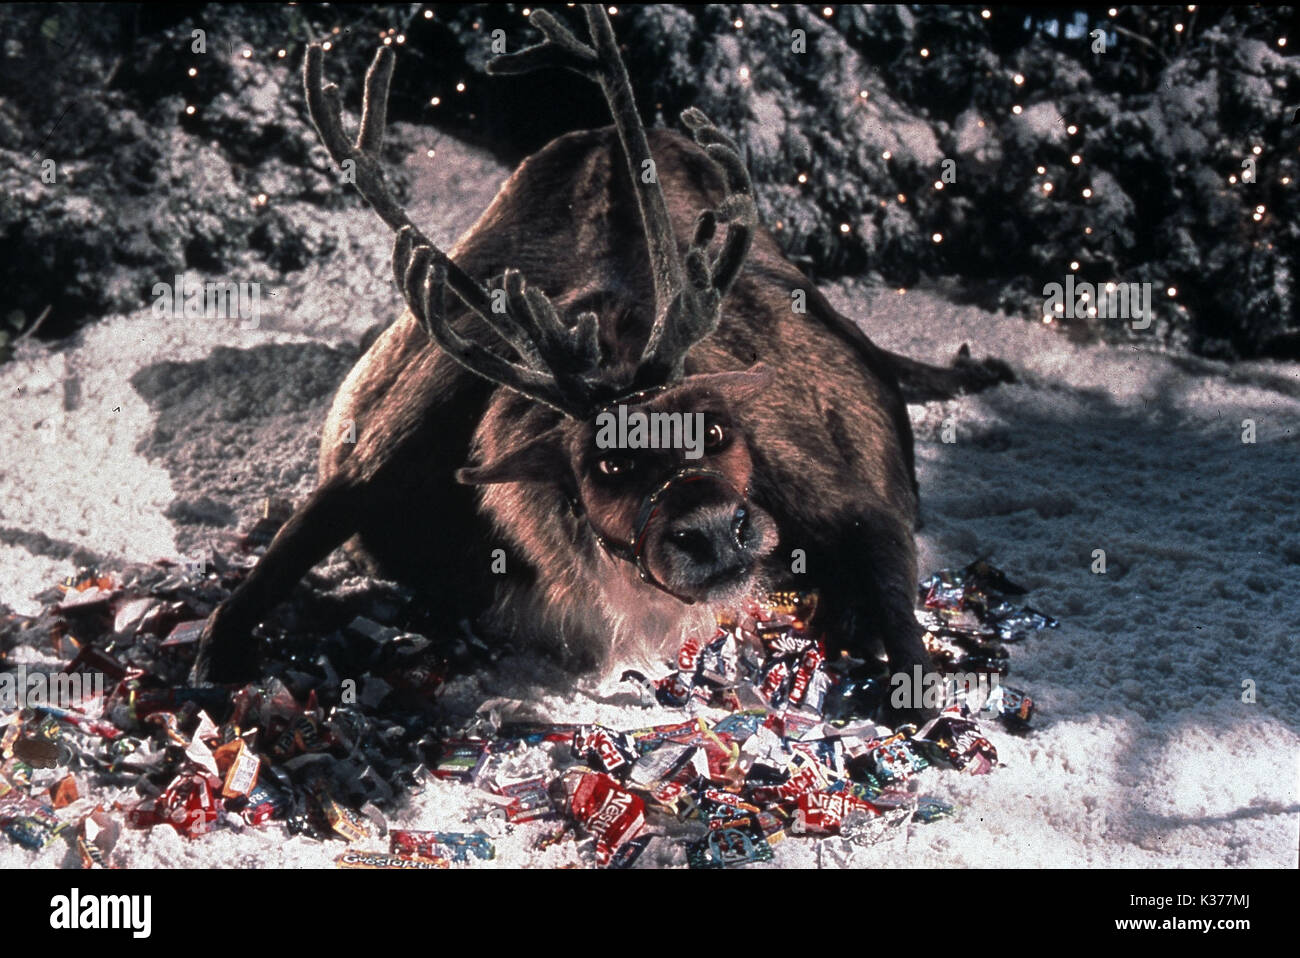 Die SANTA CLAUSE 2 BOXING CAT FILME/OUTLAW PRODUCTIONS / WALT DISNEY PICTURES Datum: 2002 Stockfoto